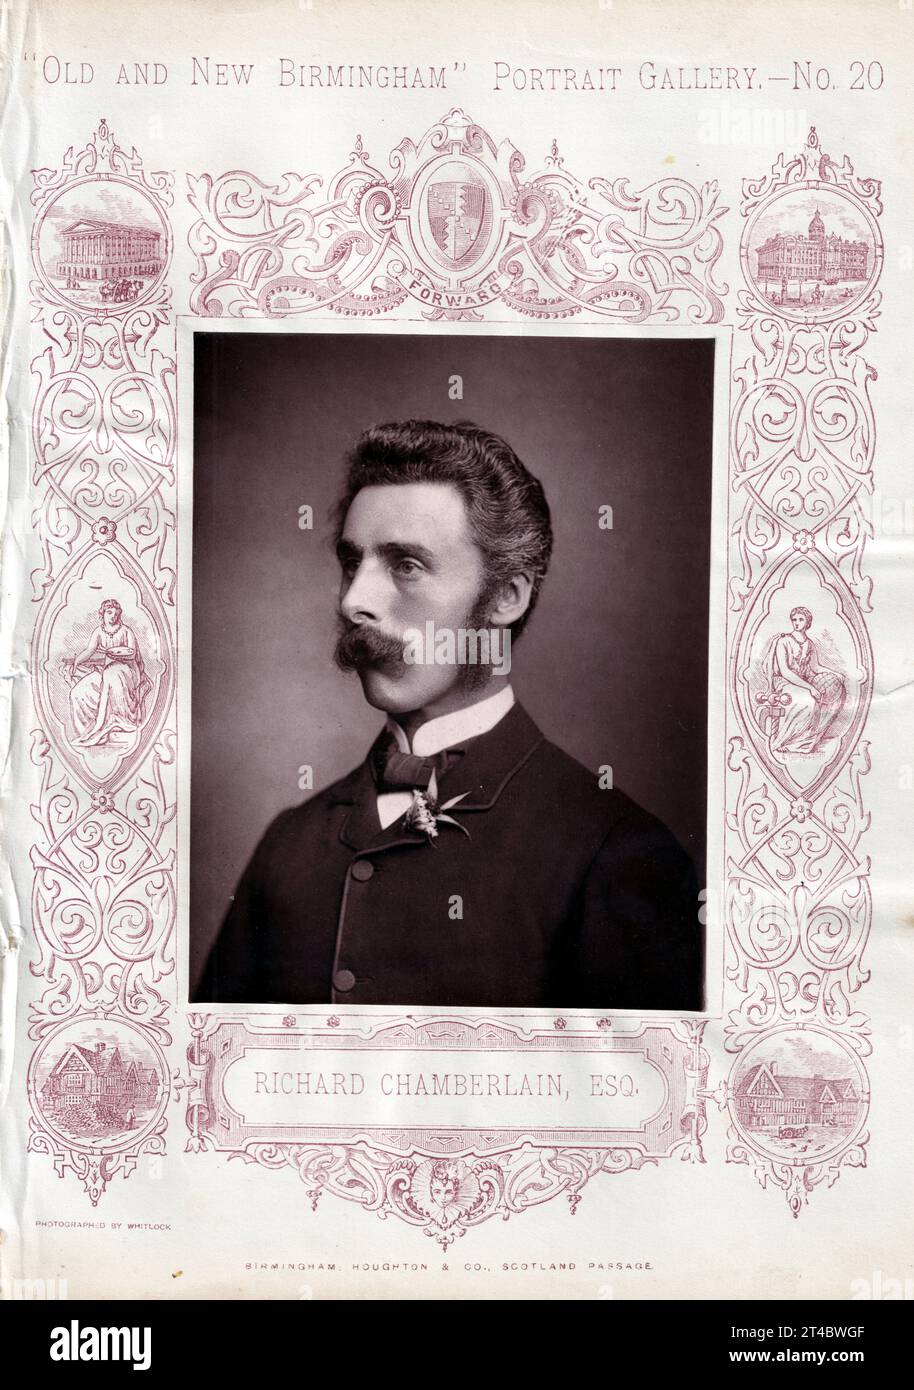 Richard Chamberlain, Esq. (1840-1899) by Henry Joseph Whitlock (1835-1918), 'Old and New Birmingham' Portrait Gallery, Houghton and Hammond, 1879. Stock Photo